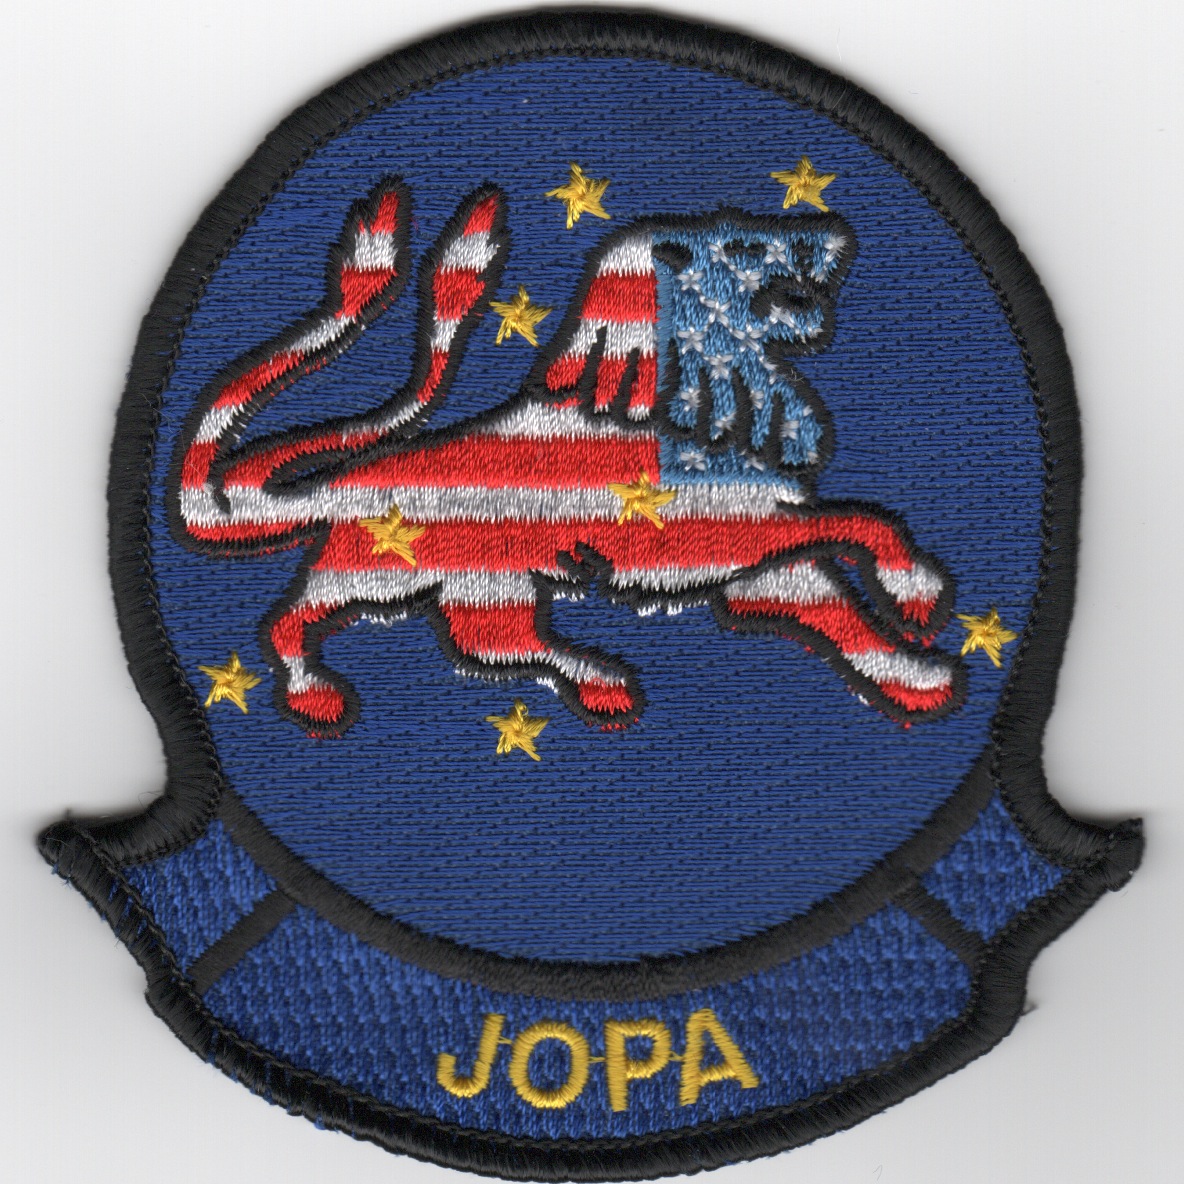 VFA-213 'JOPA' Patch